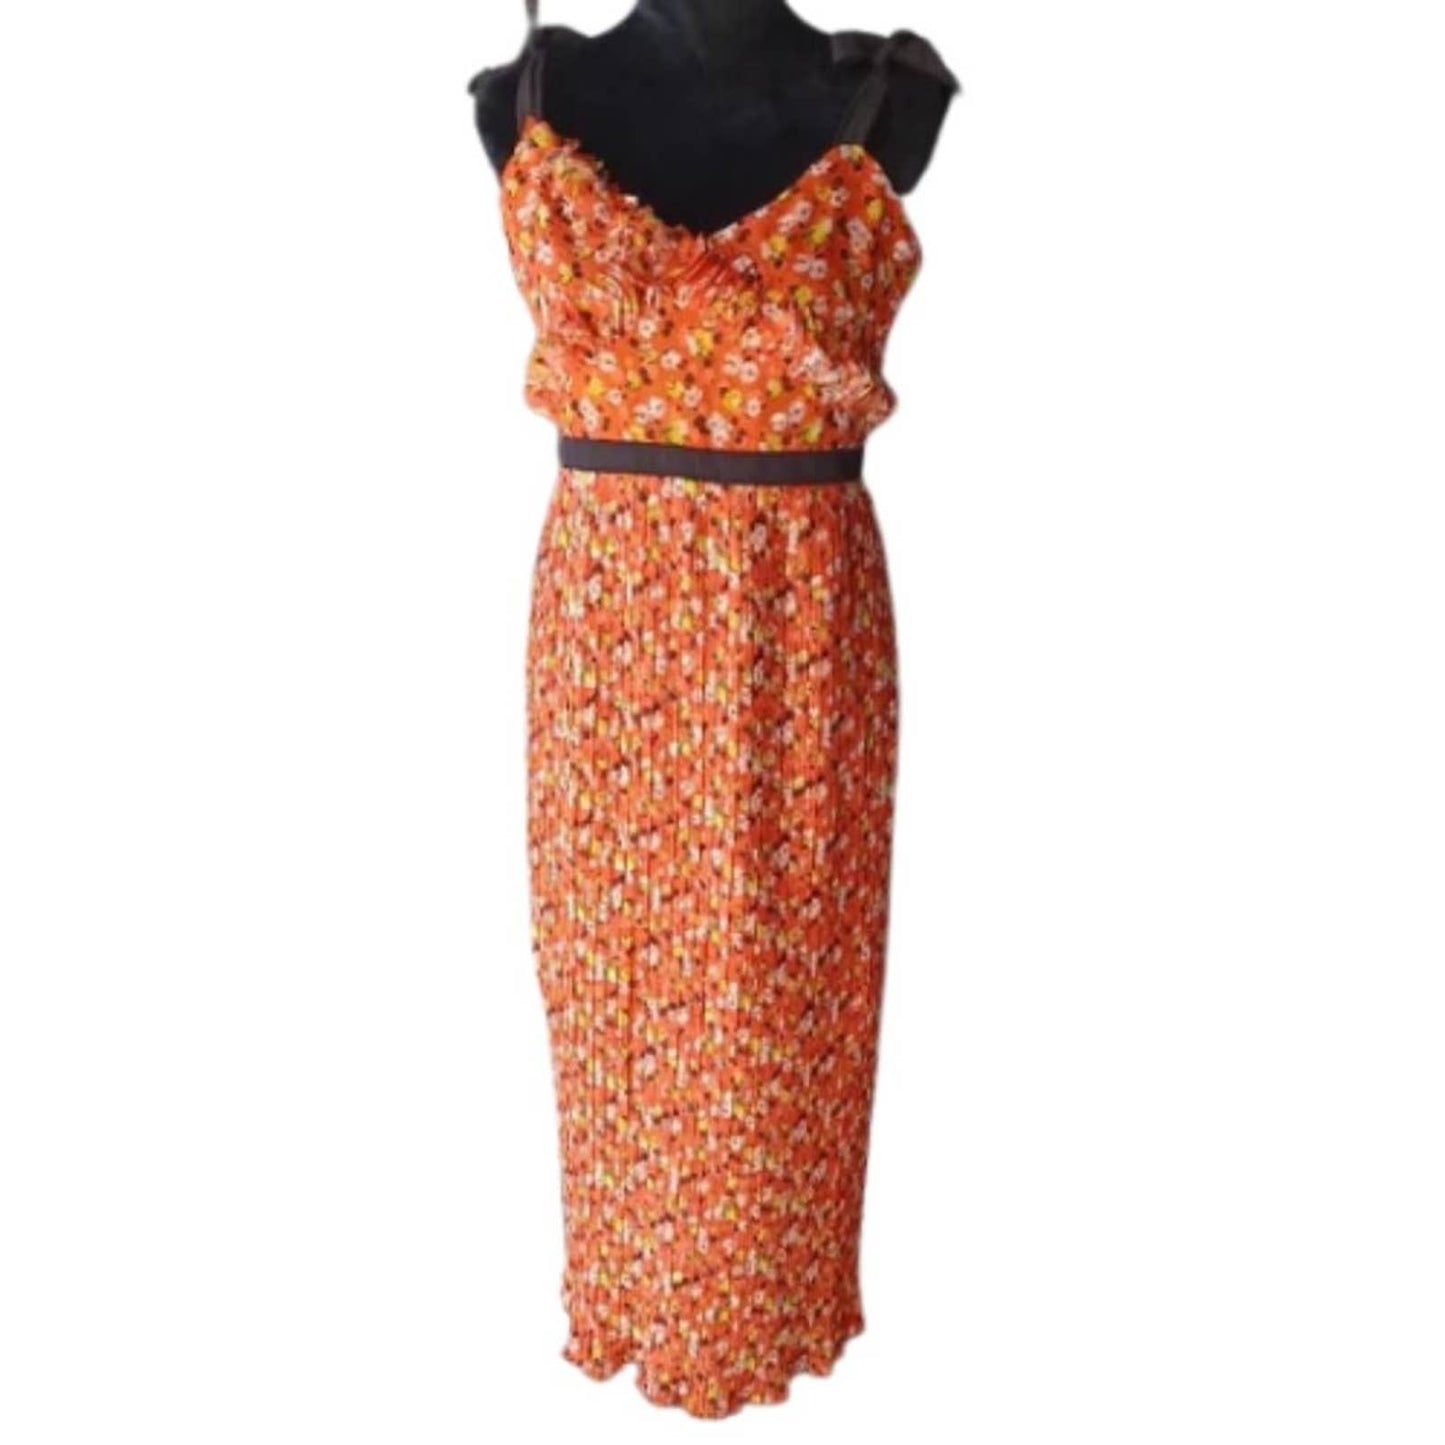 Anthropologie x FoxieDox Pleated Orange Floral Maxi Dress NWT Size Medium